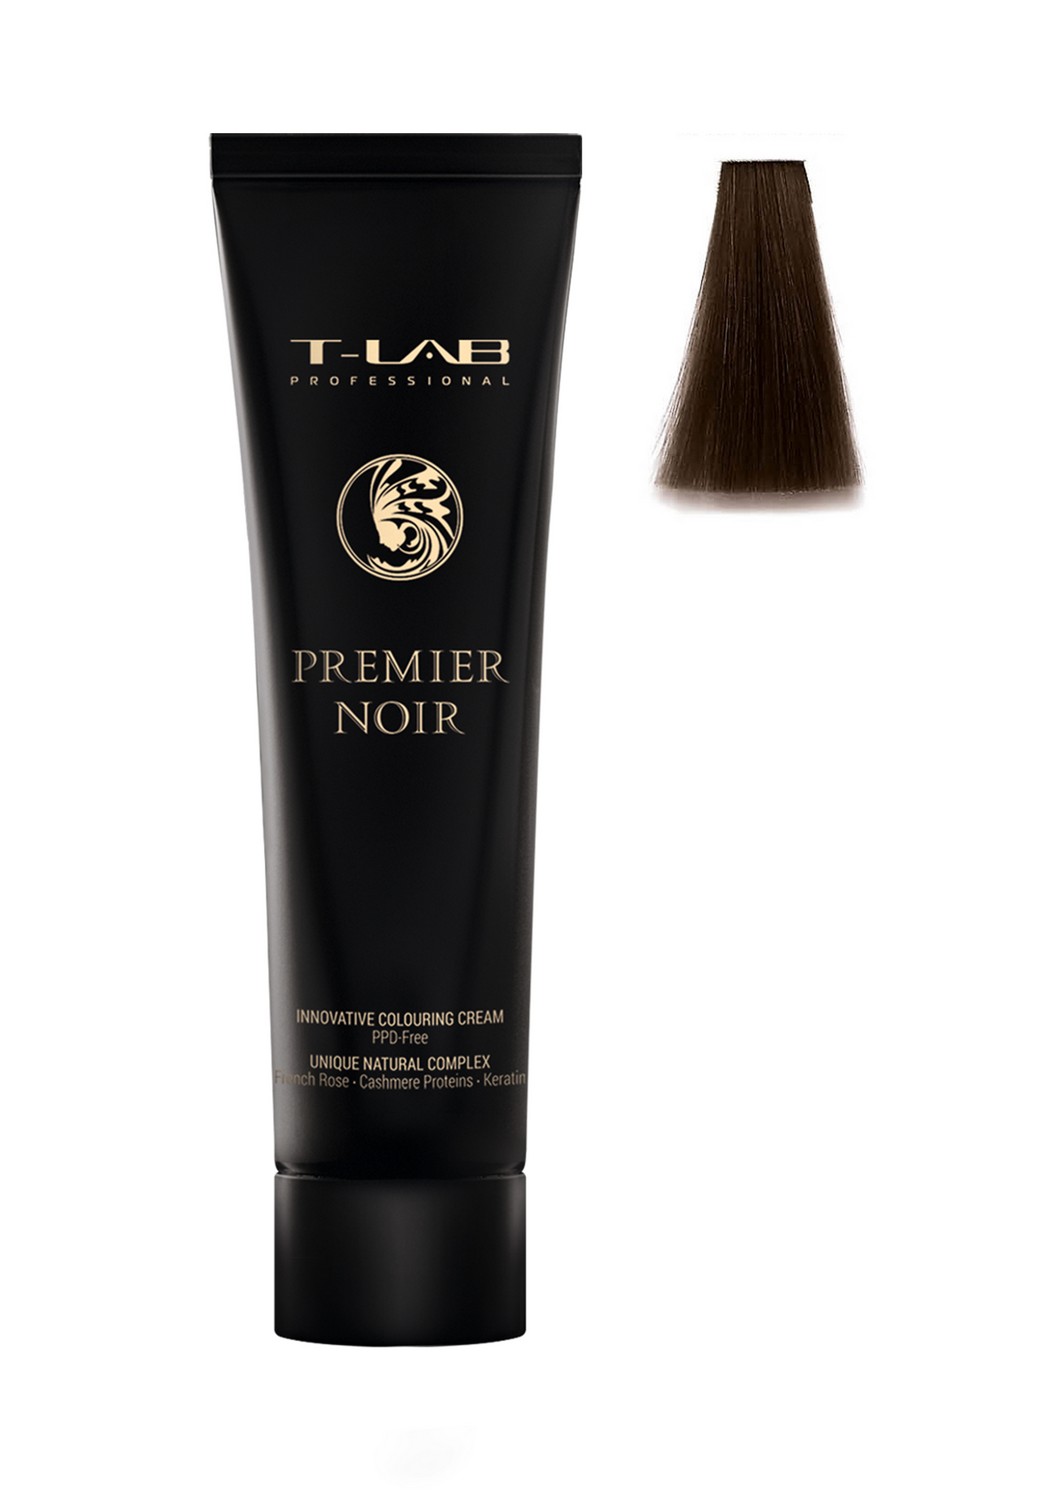 Крем-фарба T-LAB Professional Premier Noir colouring cream, відтінок 3.0 (natural dark brown) - фото 2